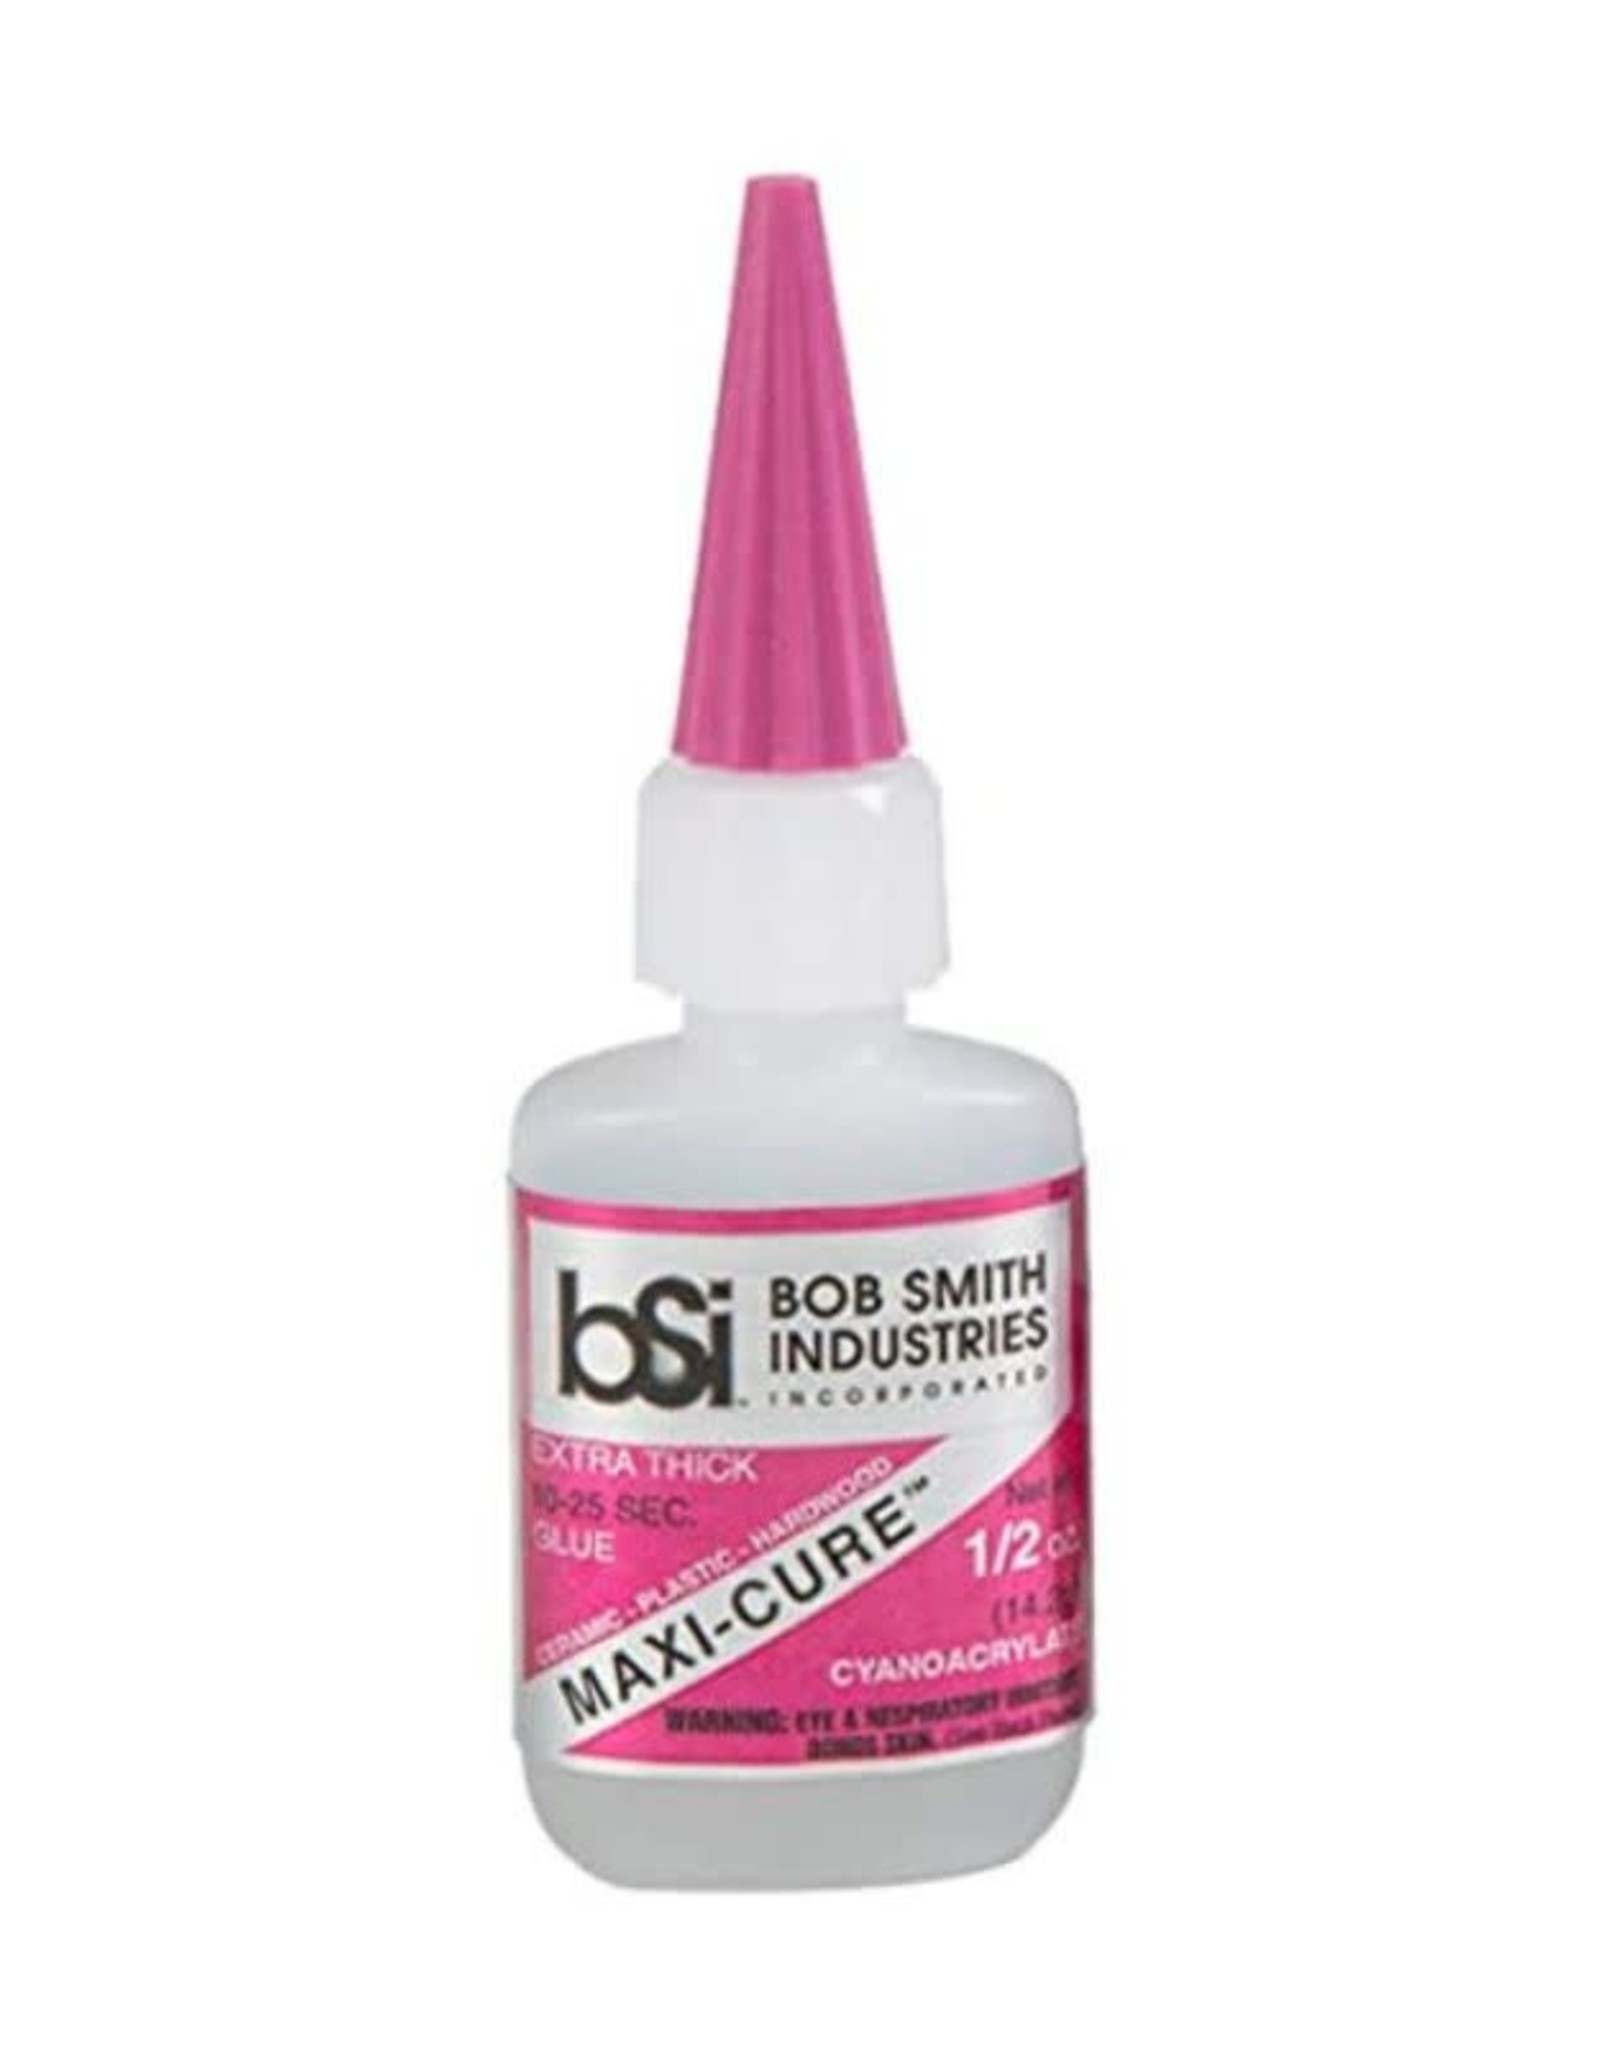 Bob Smith Industries Cyanoacrylate Thick Glue 1/2 oz.